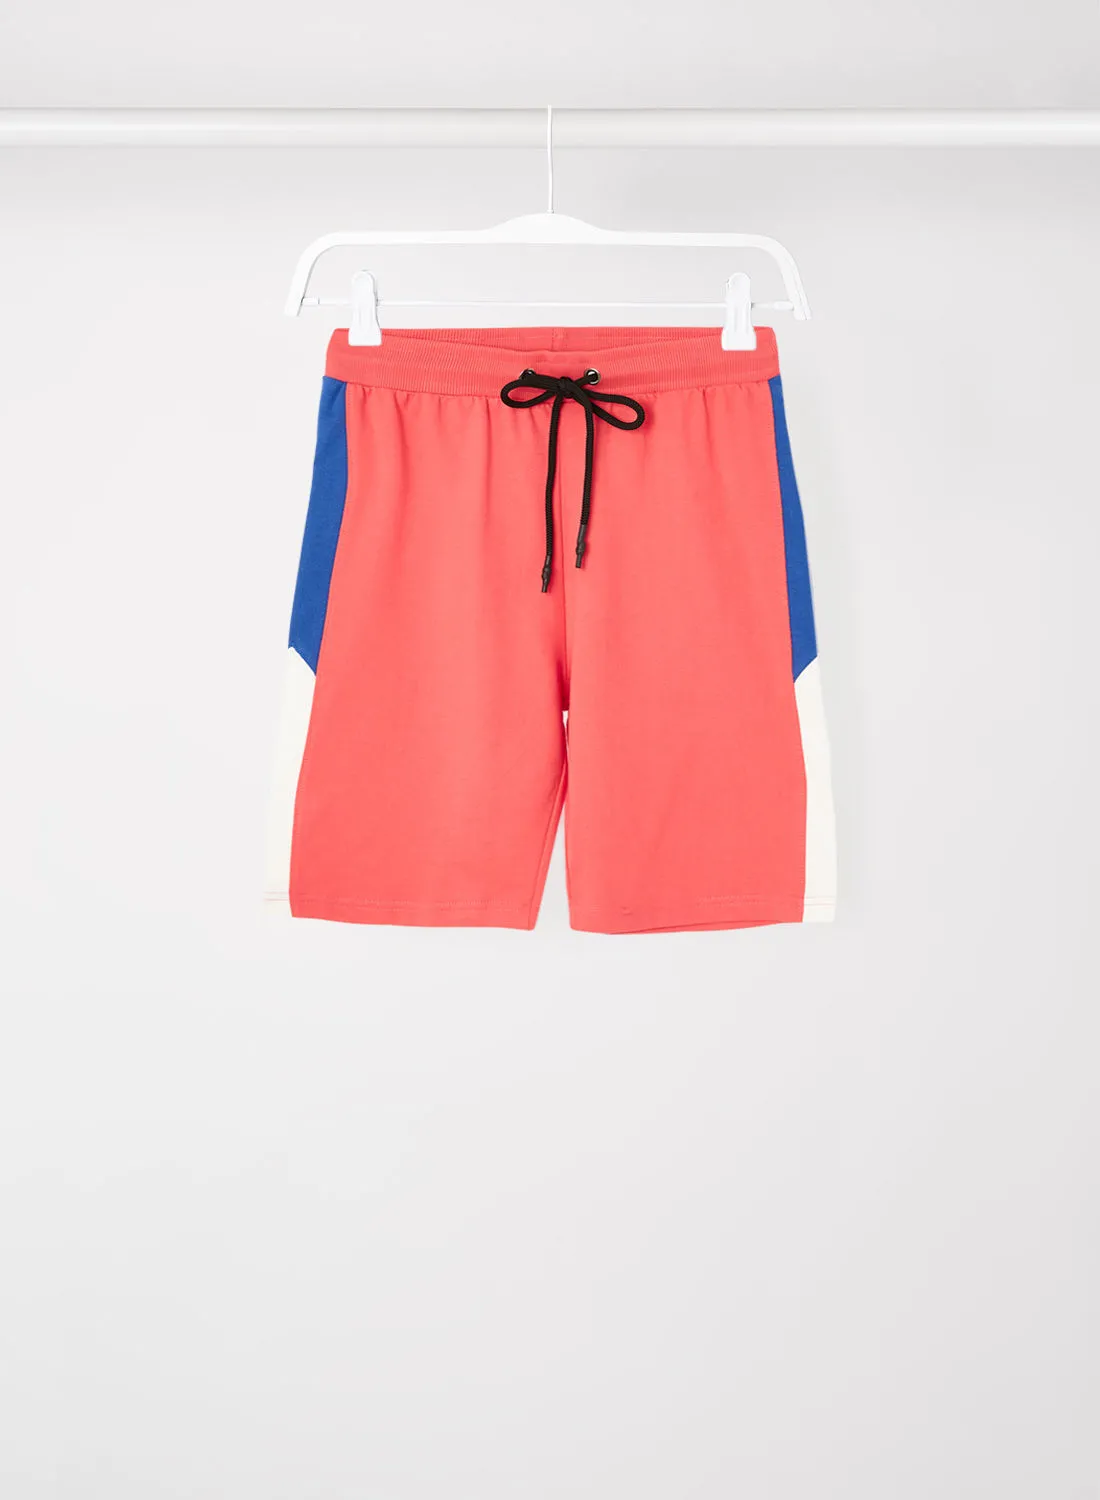 ABOF Colourblock Pattern Elastic Waistband Drawstring Shorts Pink/White/Blue